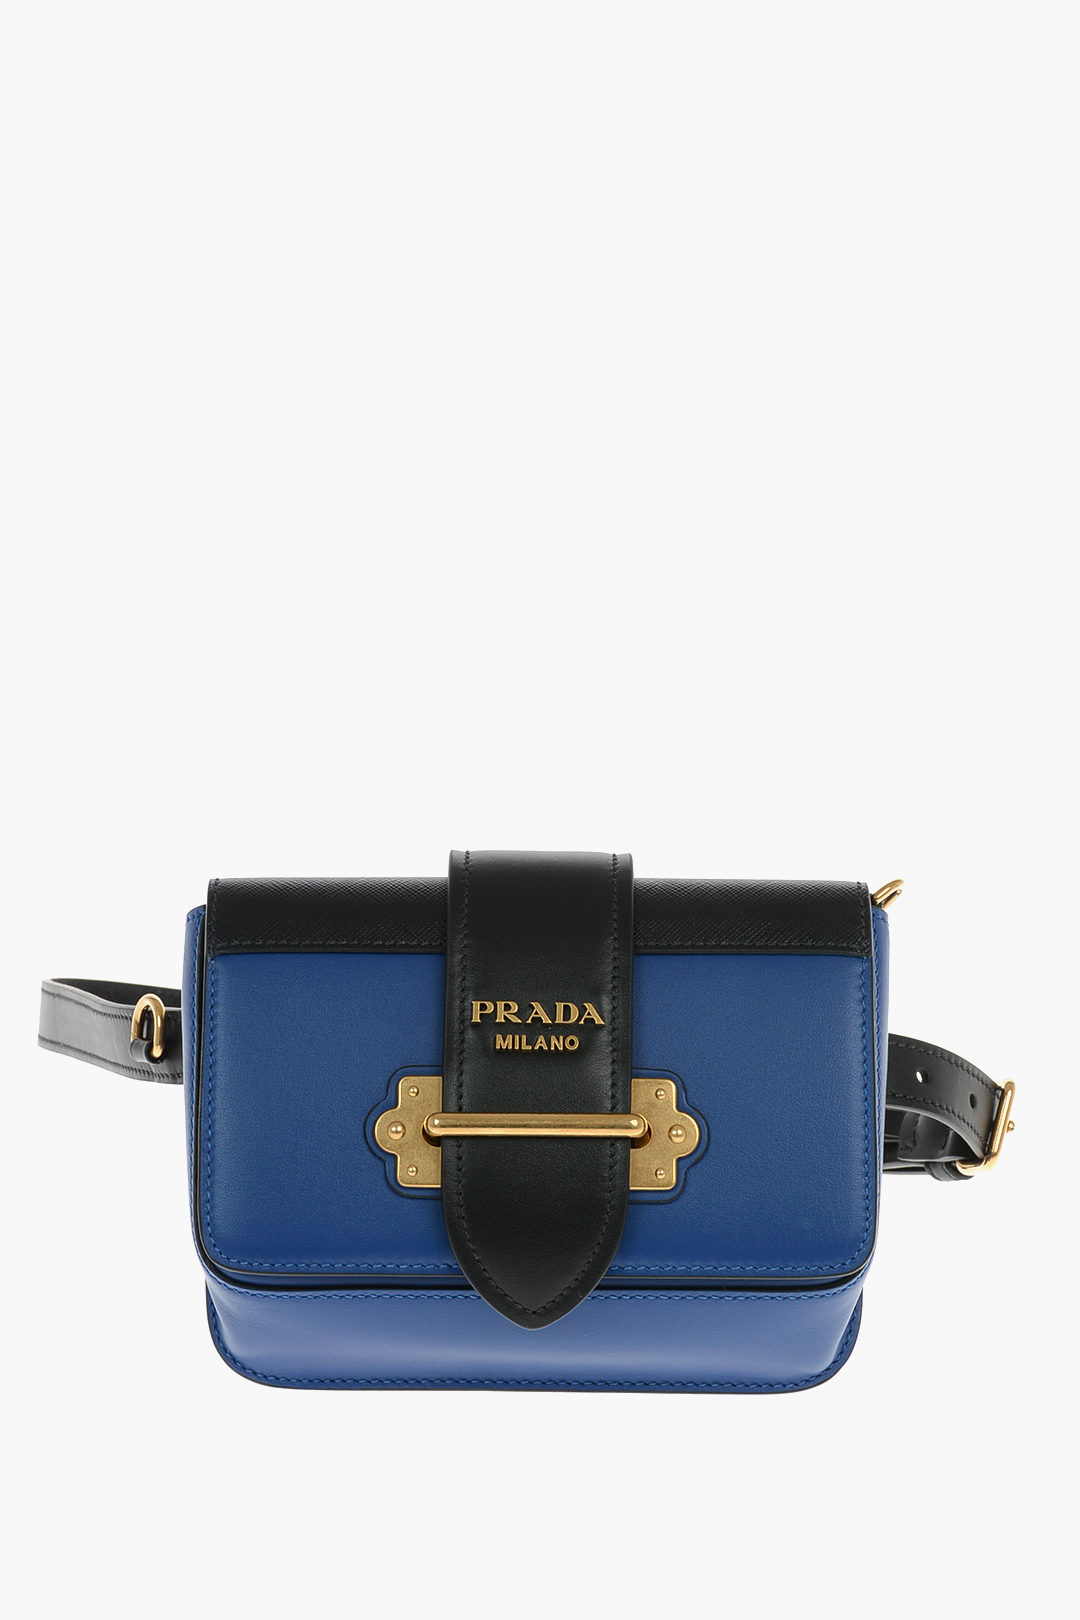 Prada Women's Belt Bags